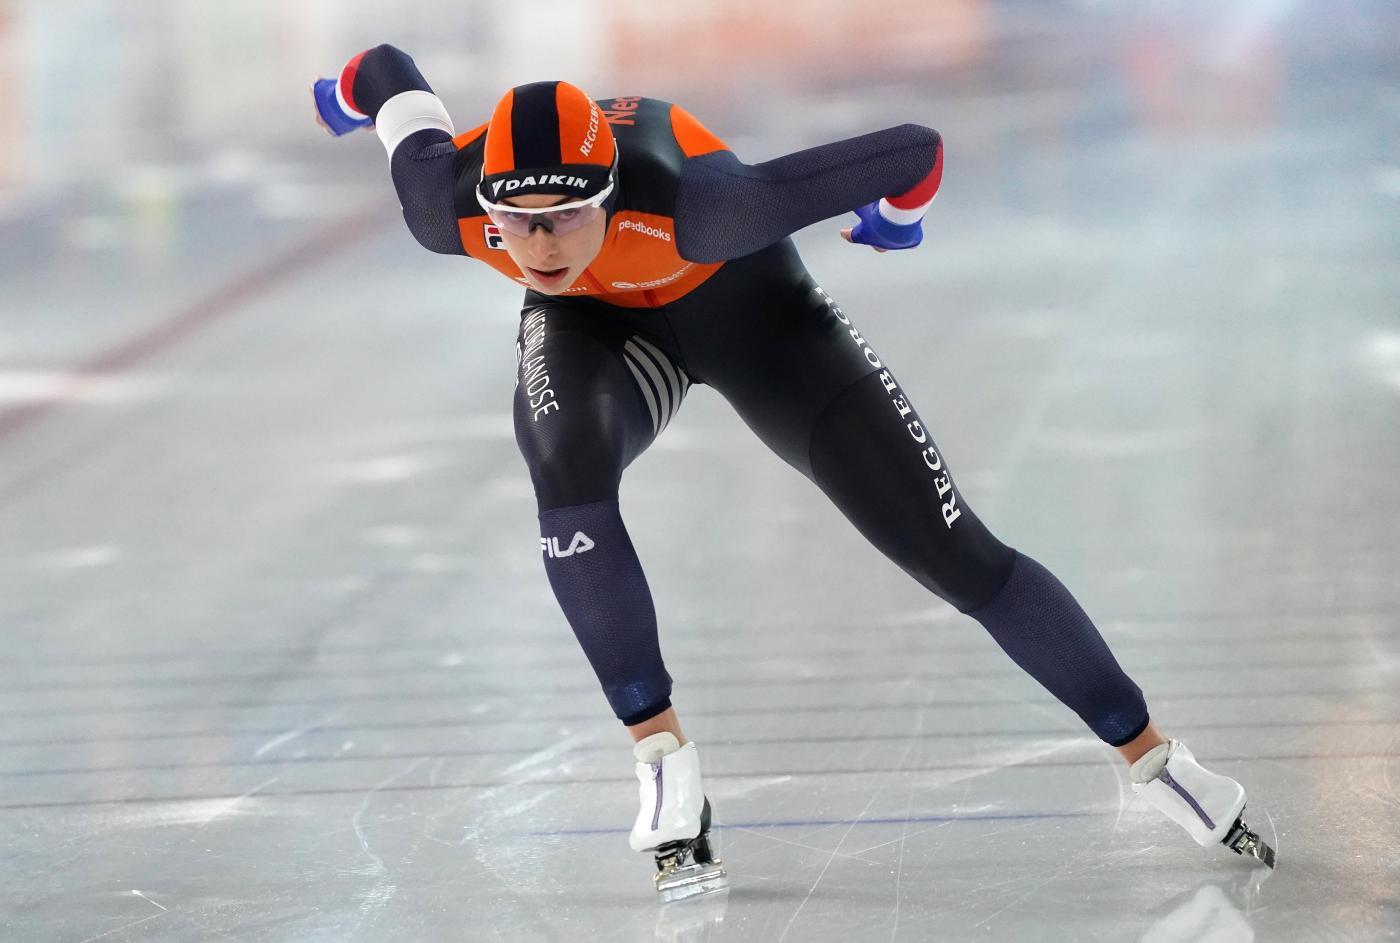 vier keer documentaire enthousiasme Liveblog WK: Femke Kok wereldkampioene 500 meter! | Schaatsen.nl